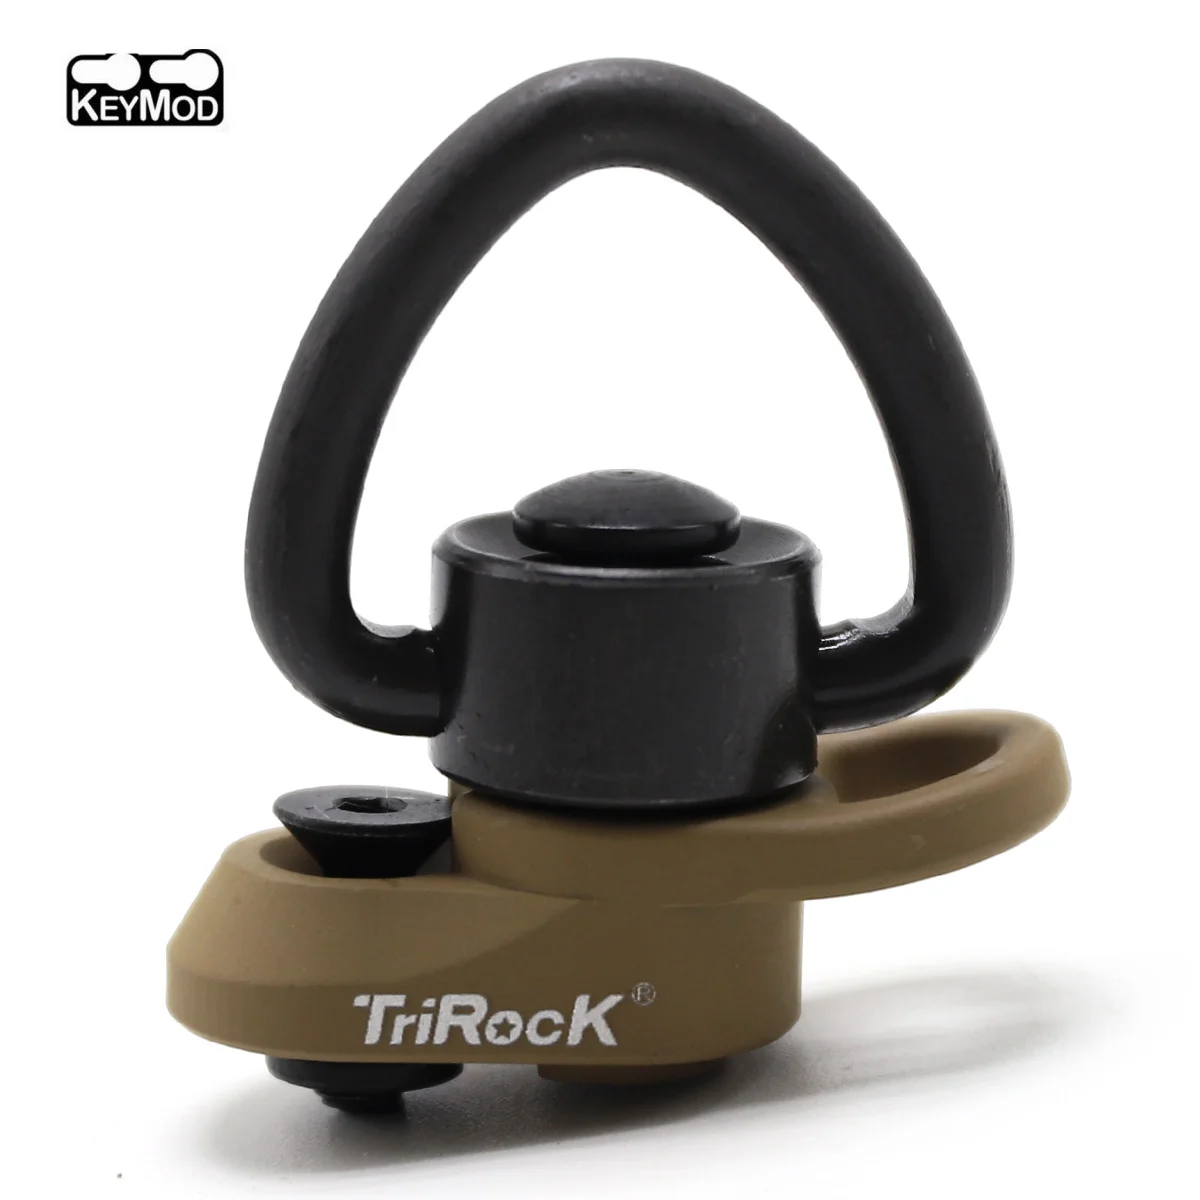 Trirock optional Keymod/M-LOK Heart-Shape Push Button QD sling swivel w/ Red/FDE/Black Base Mount Clever Hole for Snap Clip Hook